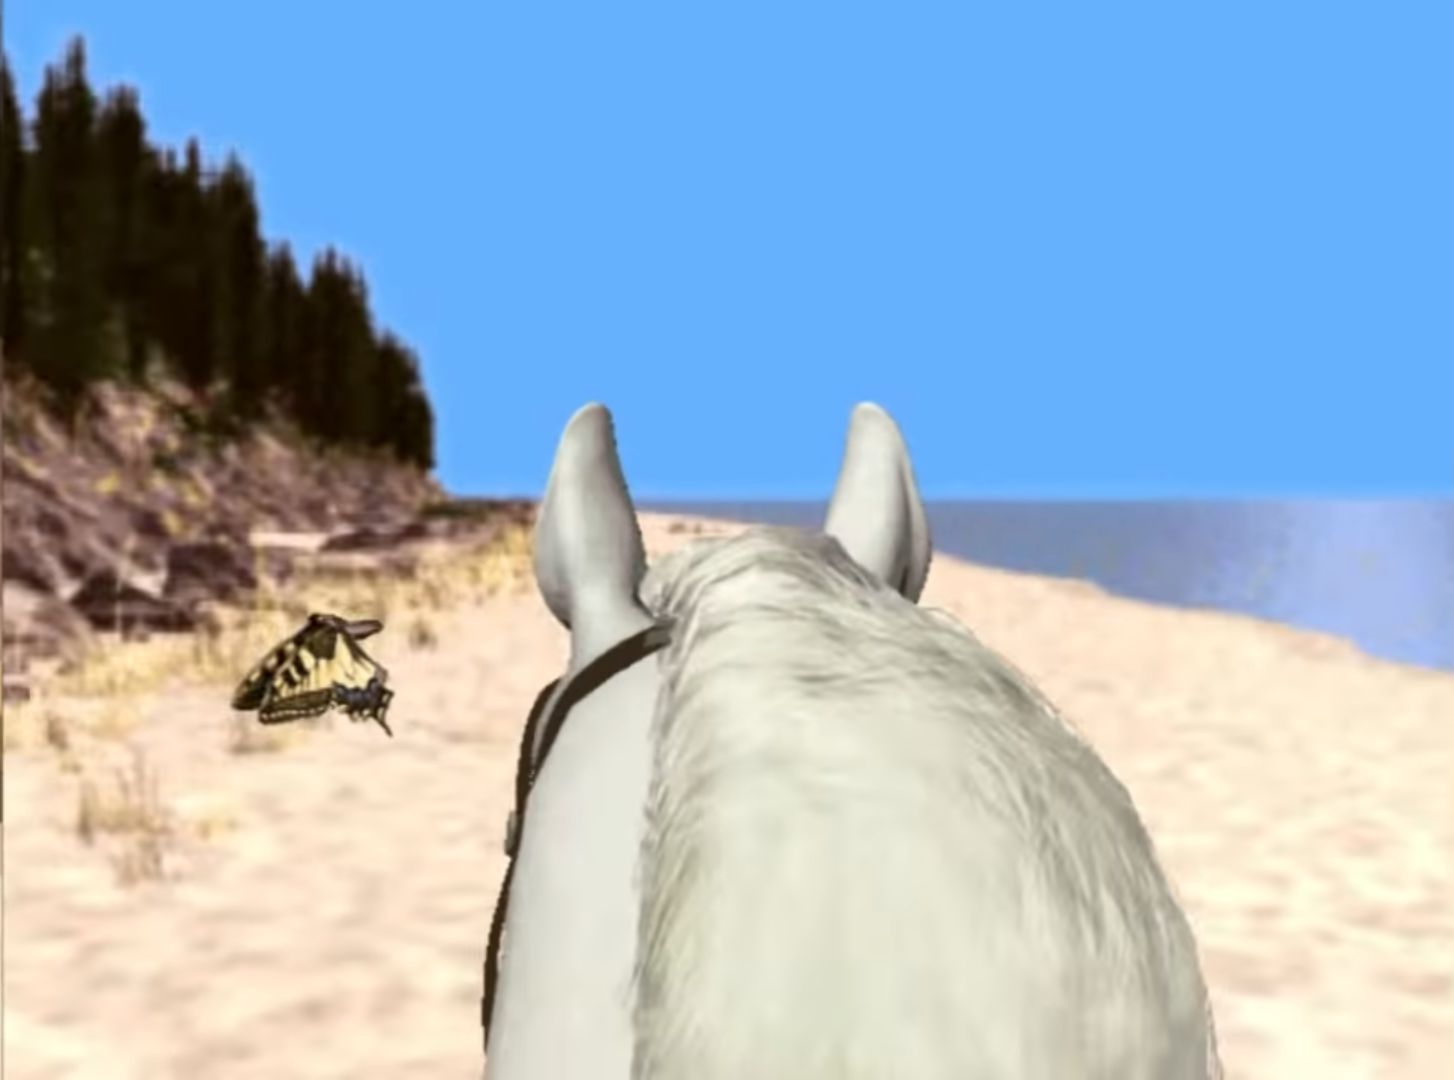 Barbie horseback riding games online